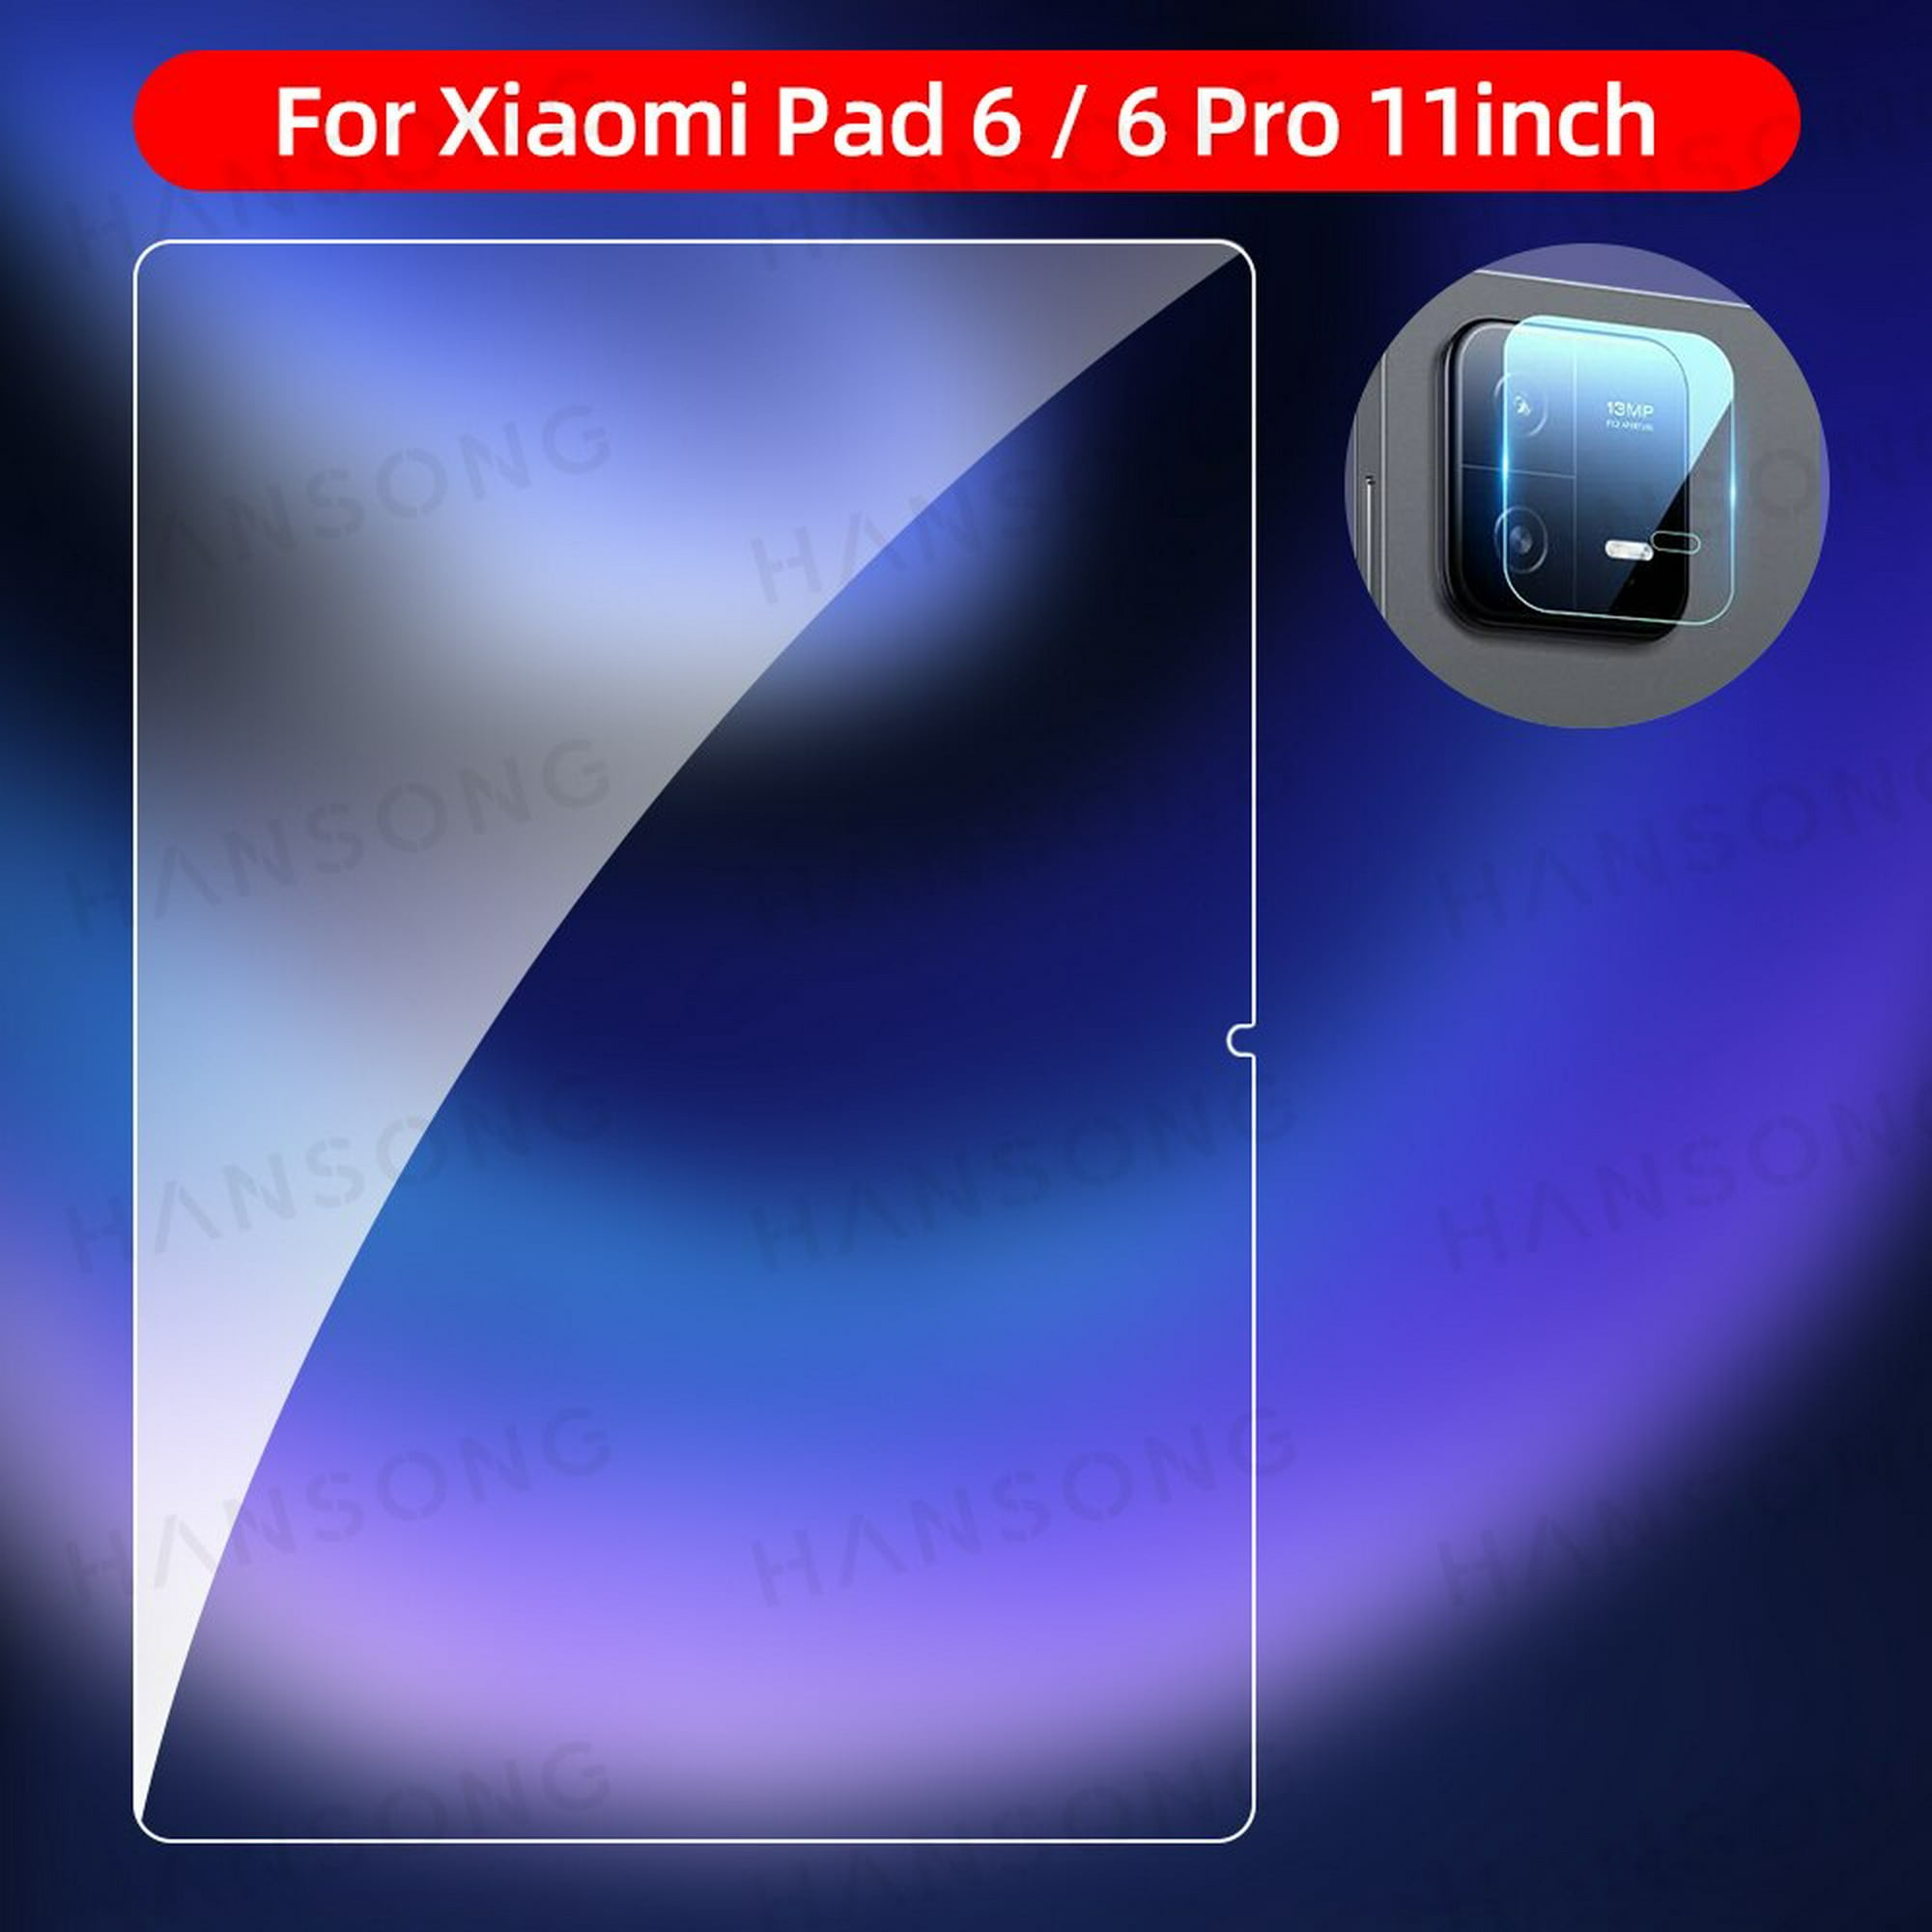 Protector De Pantalla Para Xiaomi Pad 6 Pro 11 2023